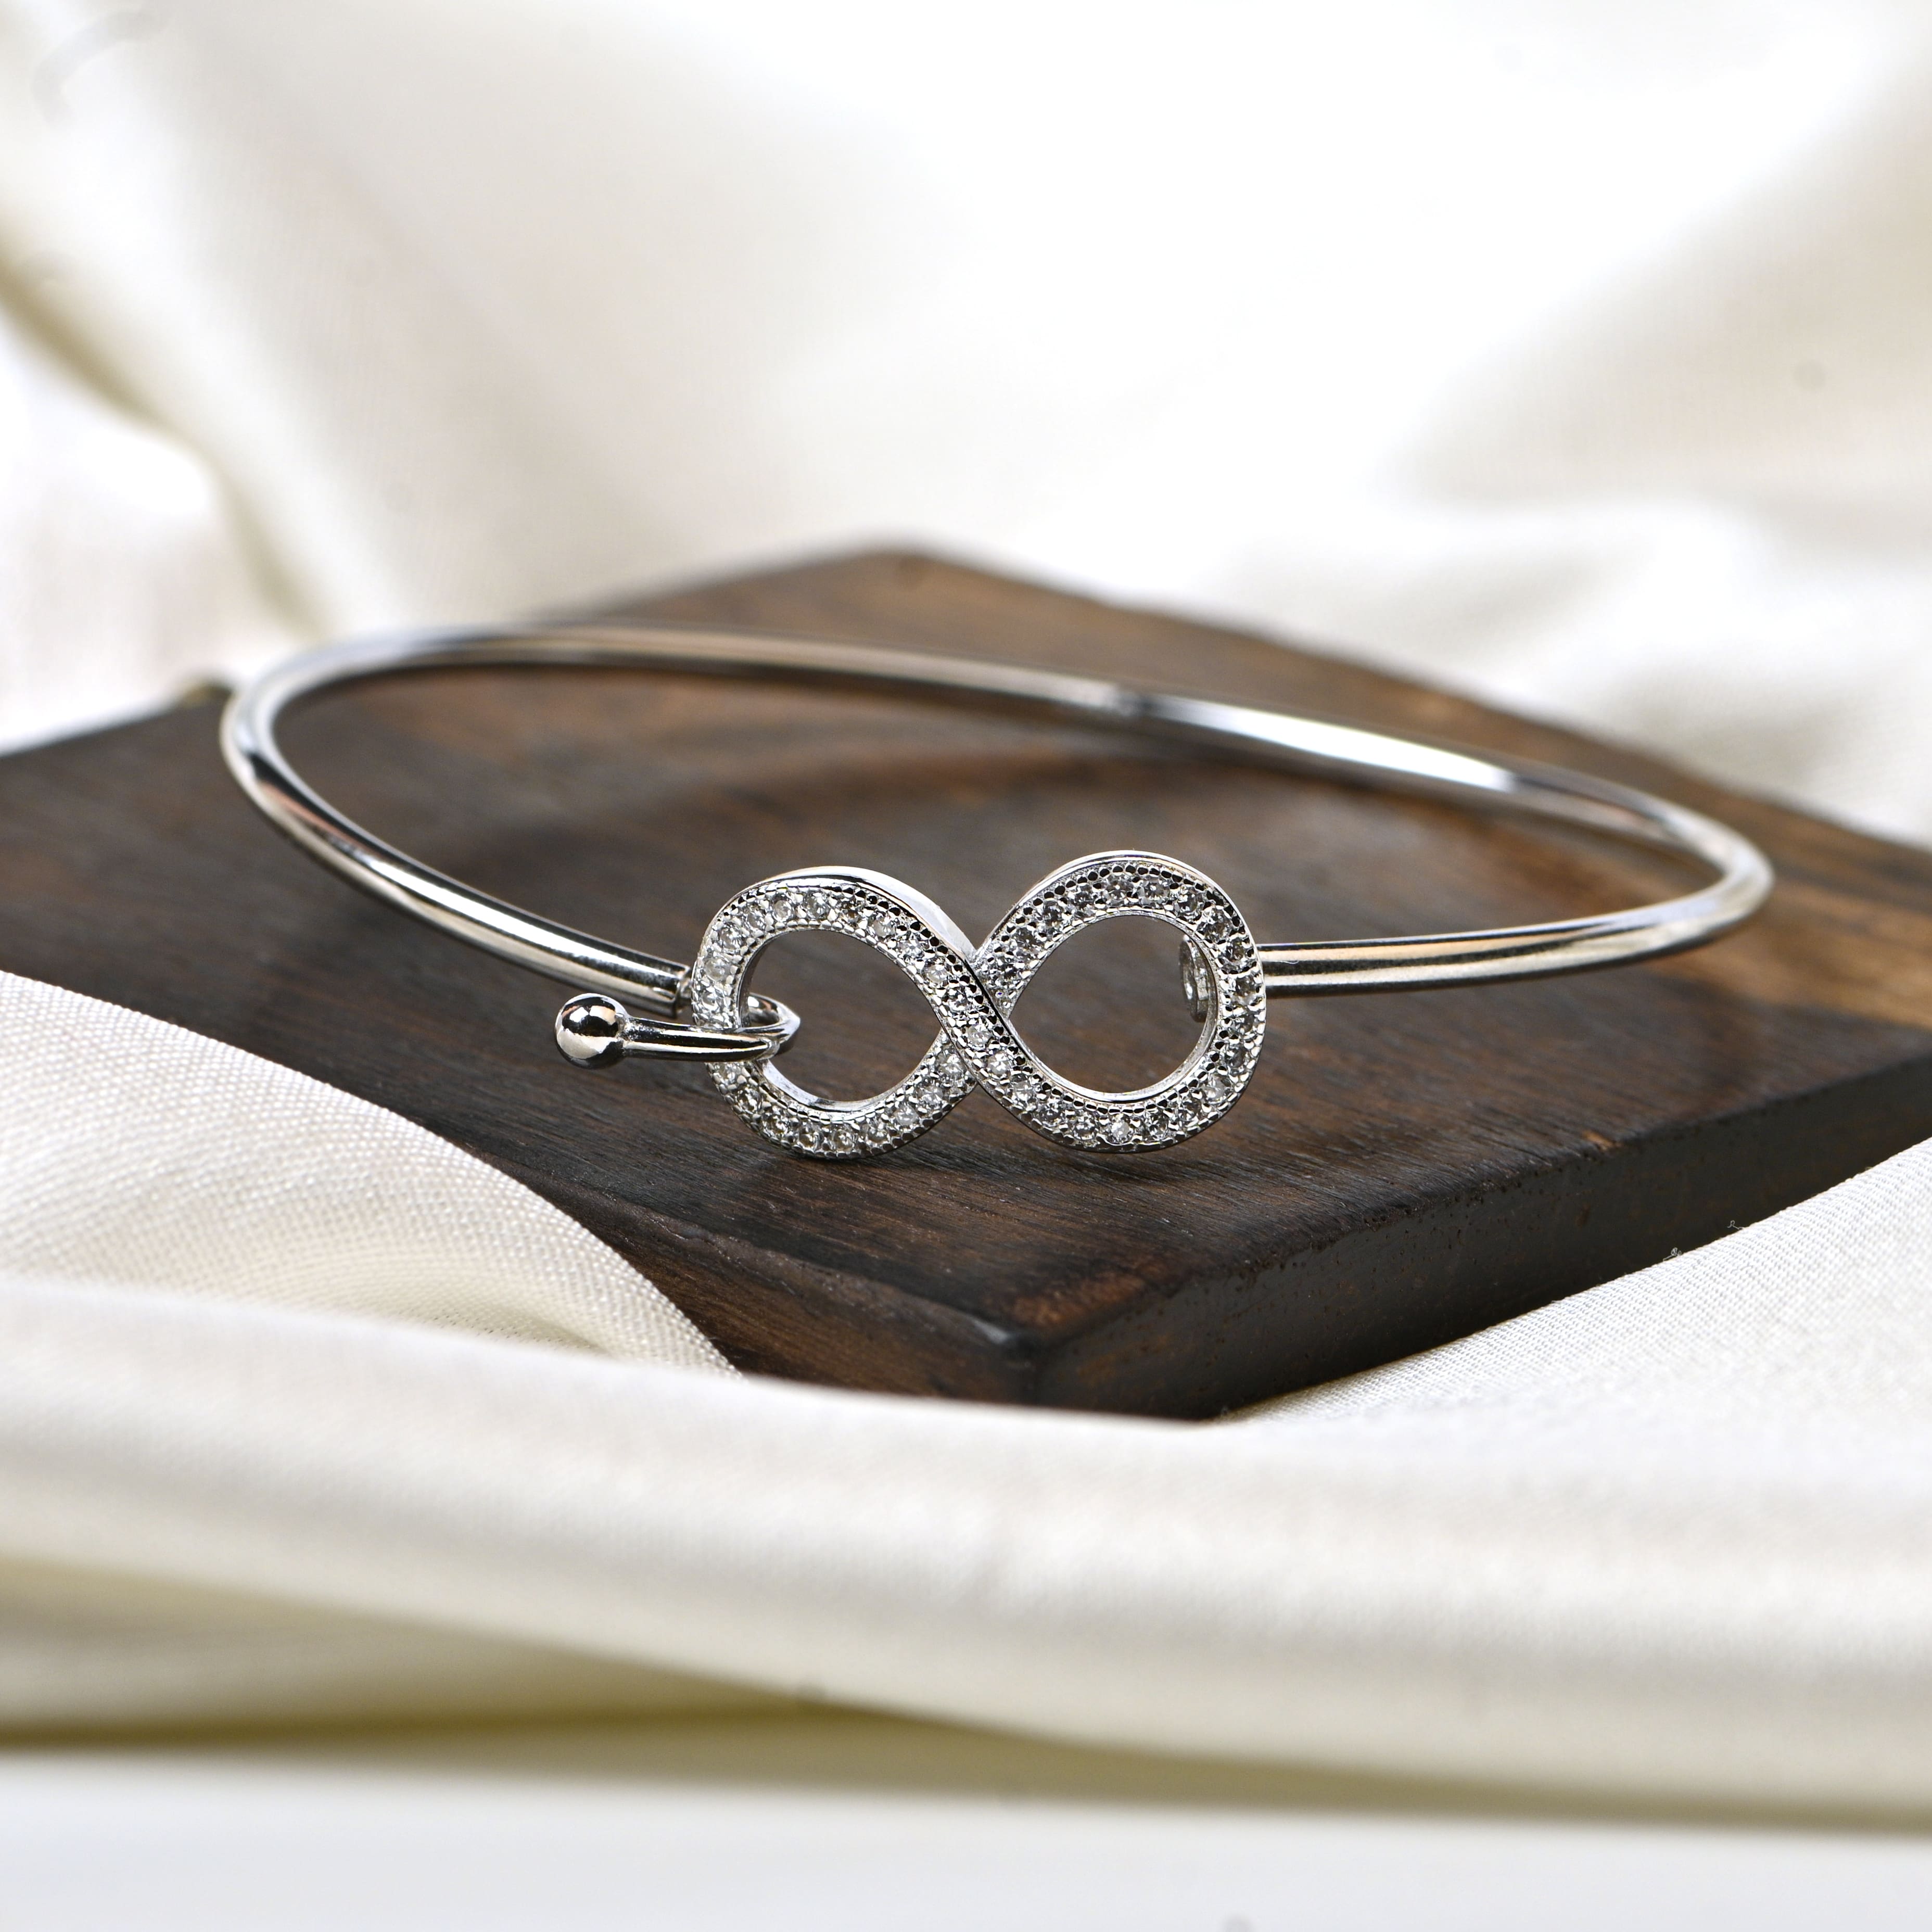 Silver infinity – Gemstreets bracelet